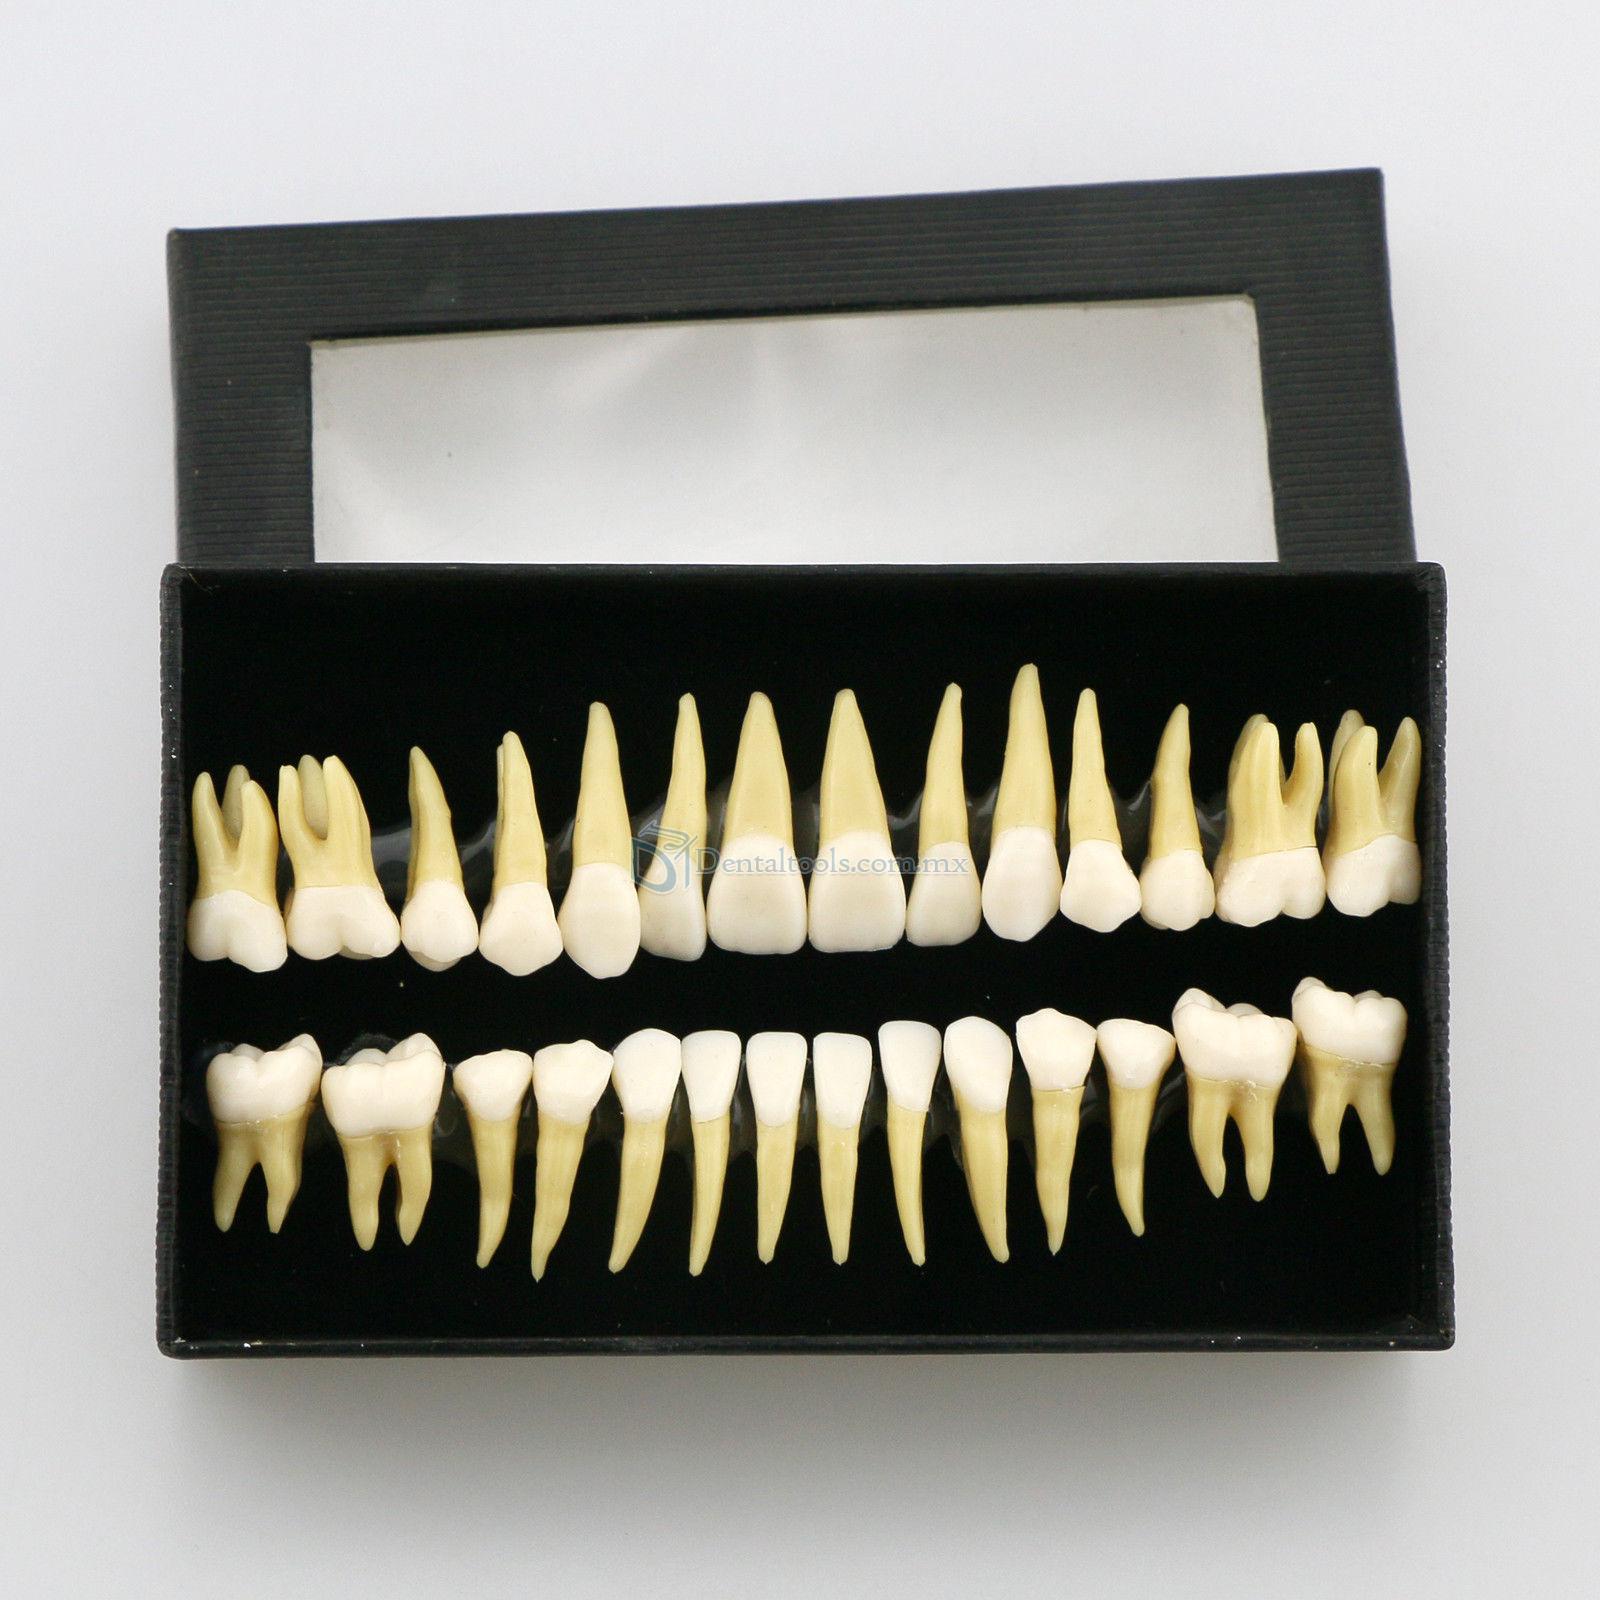 28 Pcs 1:1 Permanente completa dental modelo dientes #7008